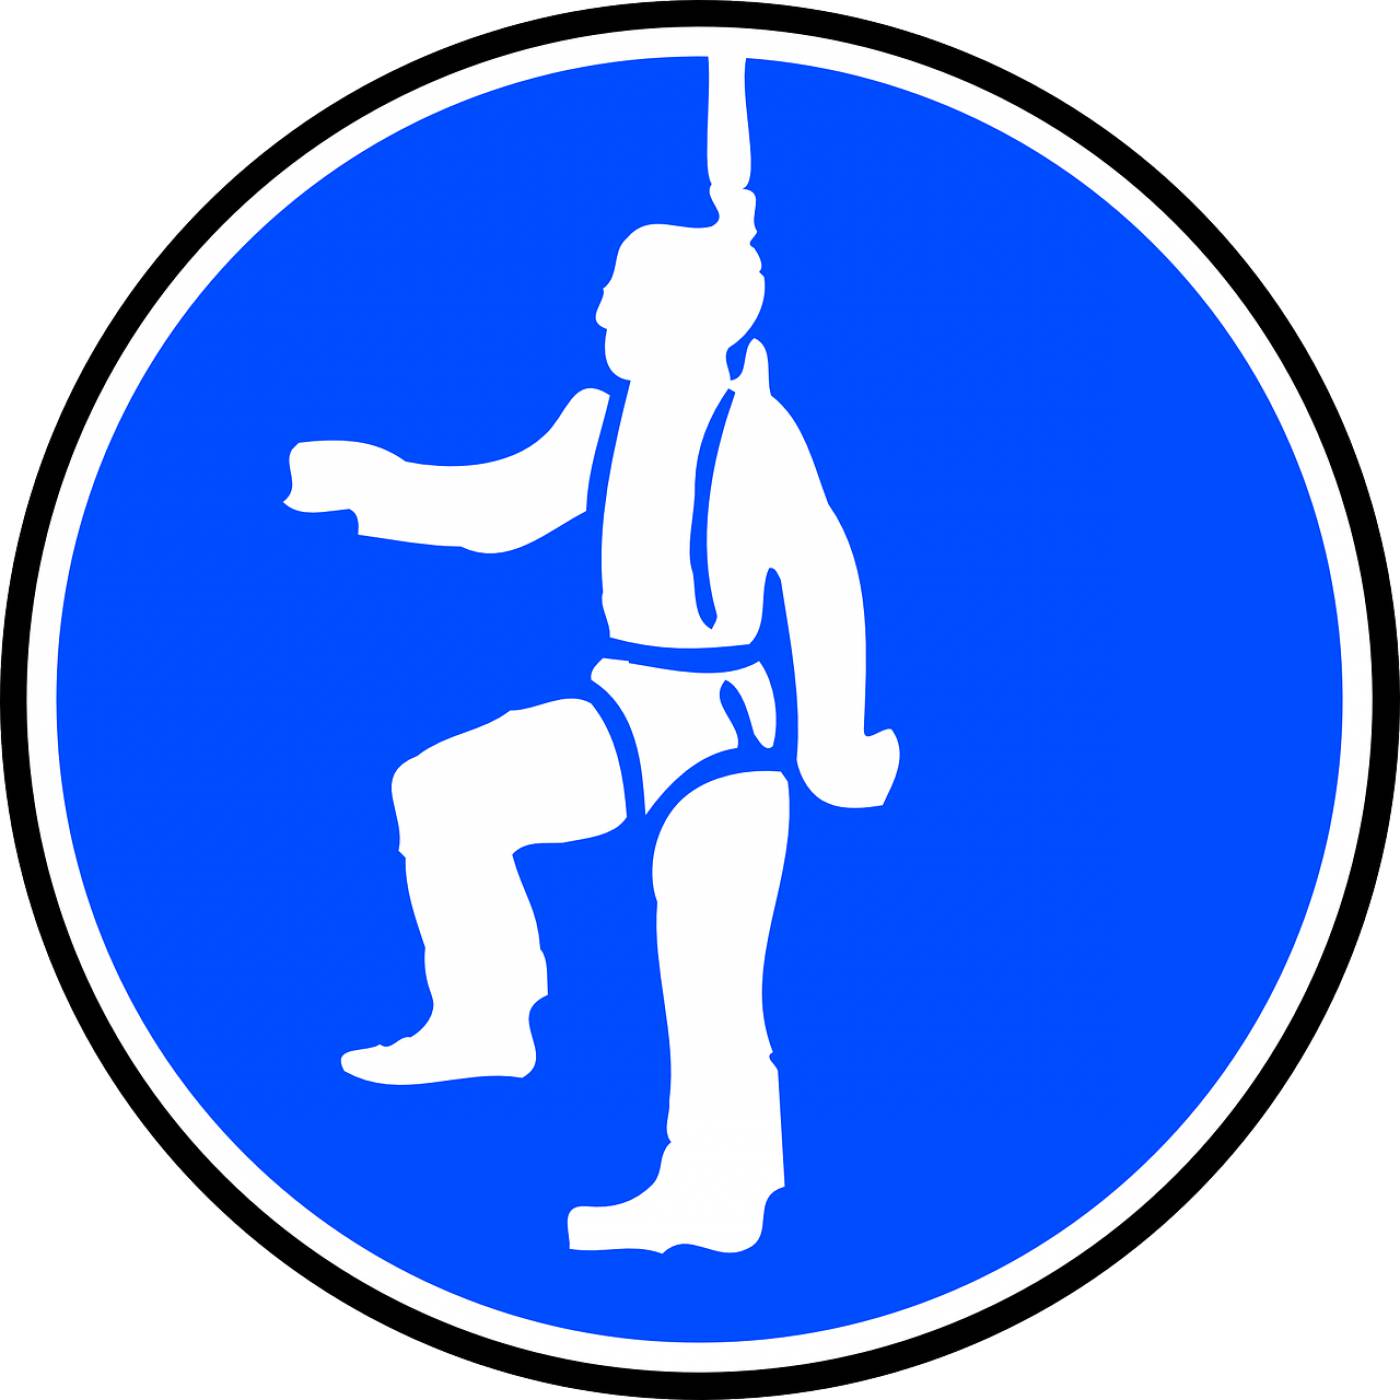 sign wear safety harness obligatory  svg vector